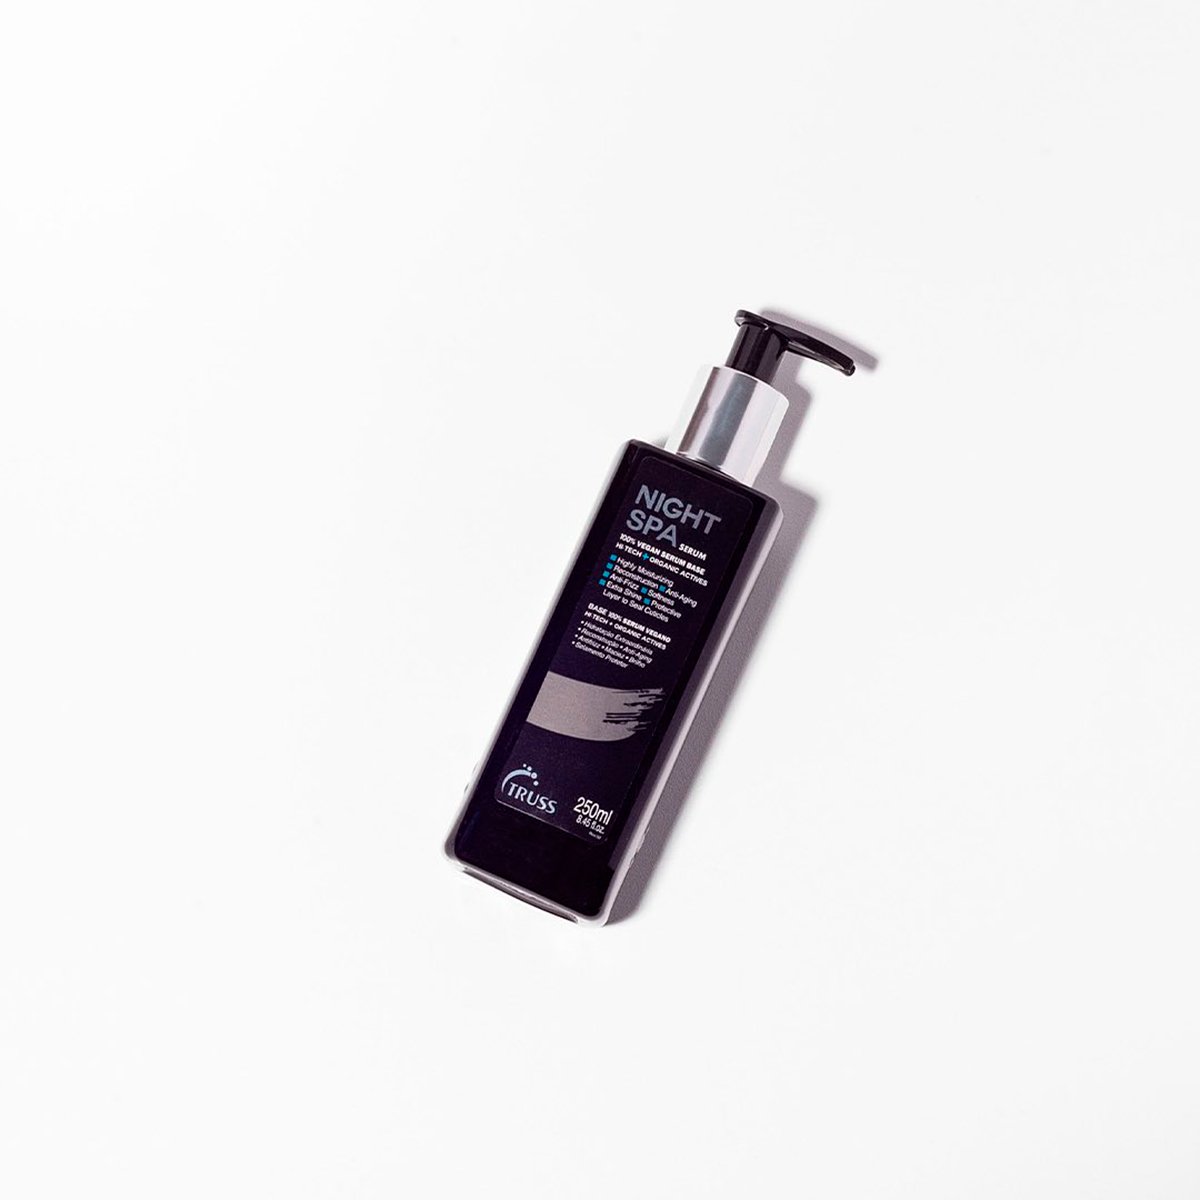 Kit Truss Blond Shampoo e Night Spa (2 produtos) ÚNICO 3